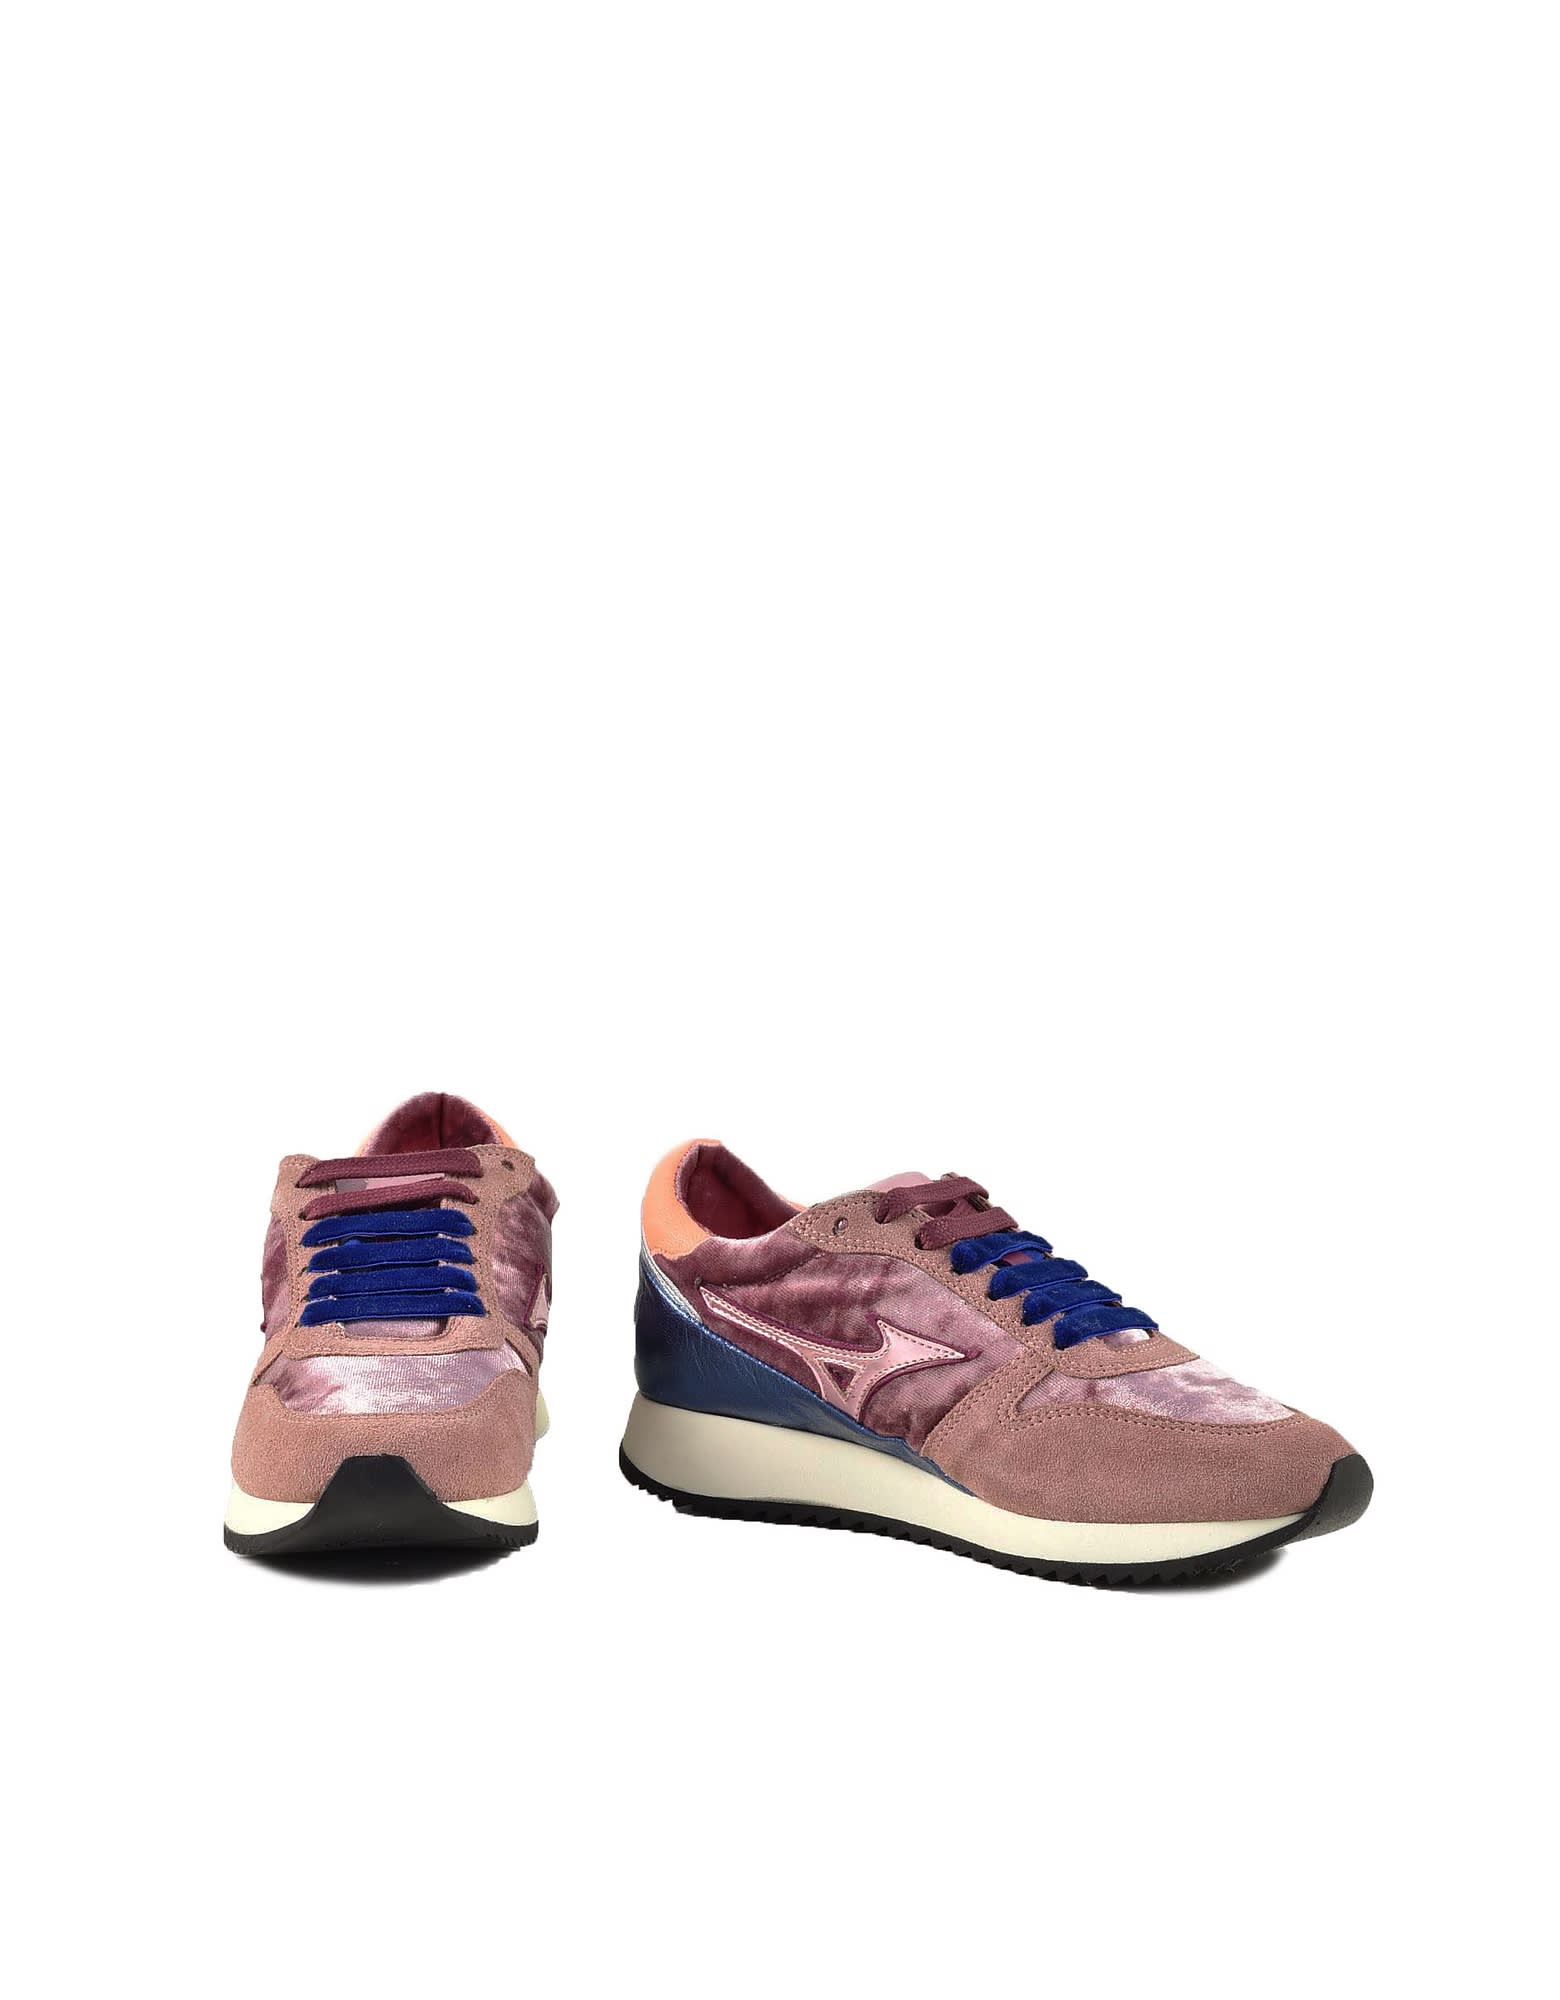 Diadora Womens Antique Pink Sneakers